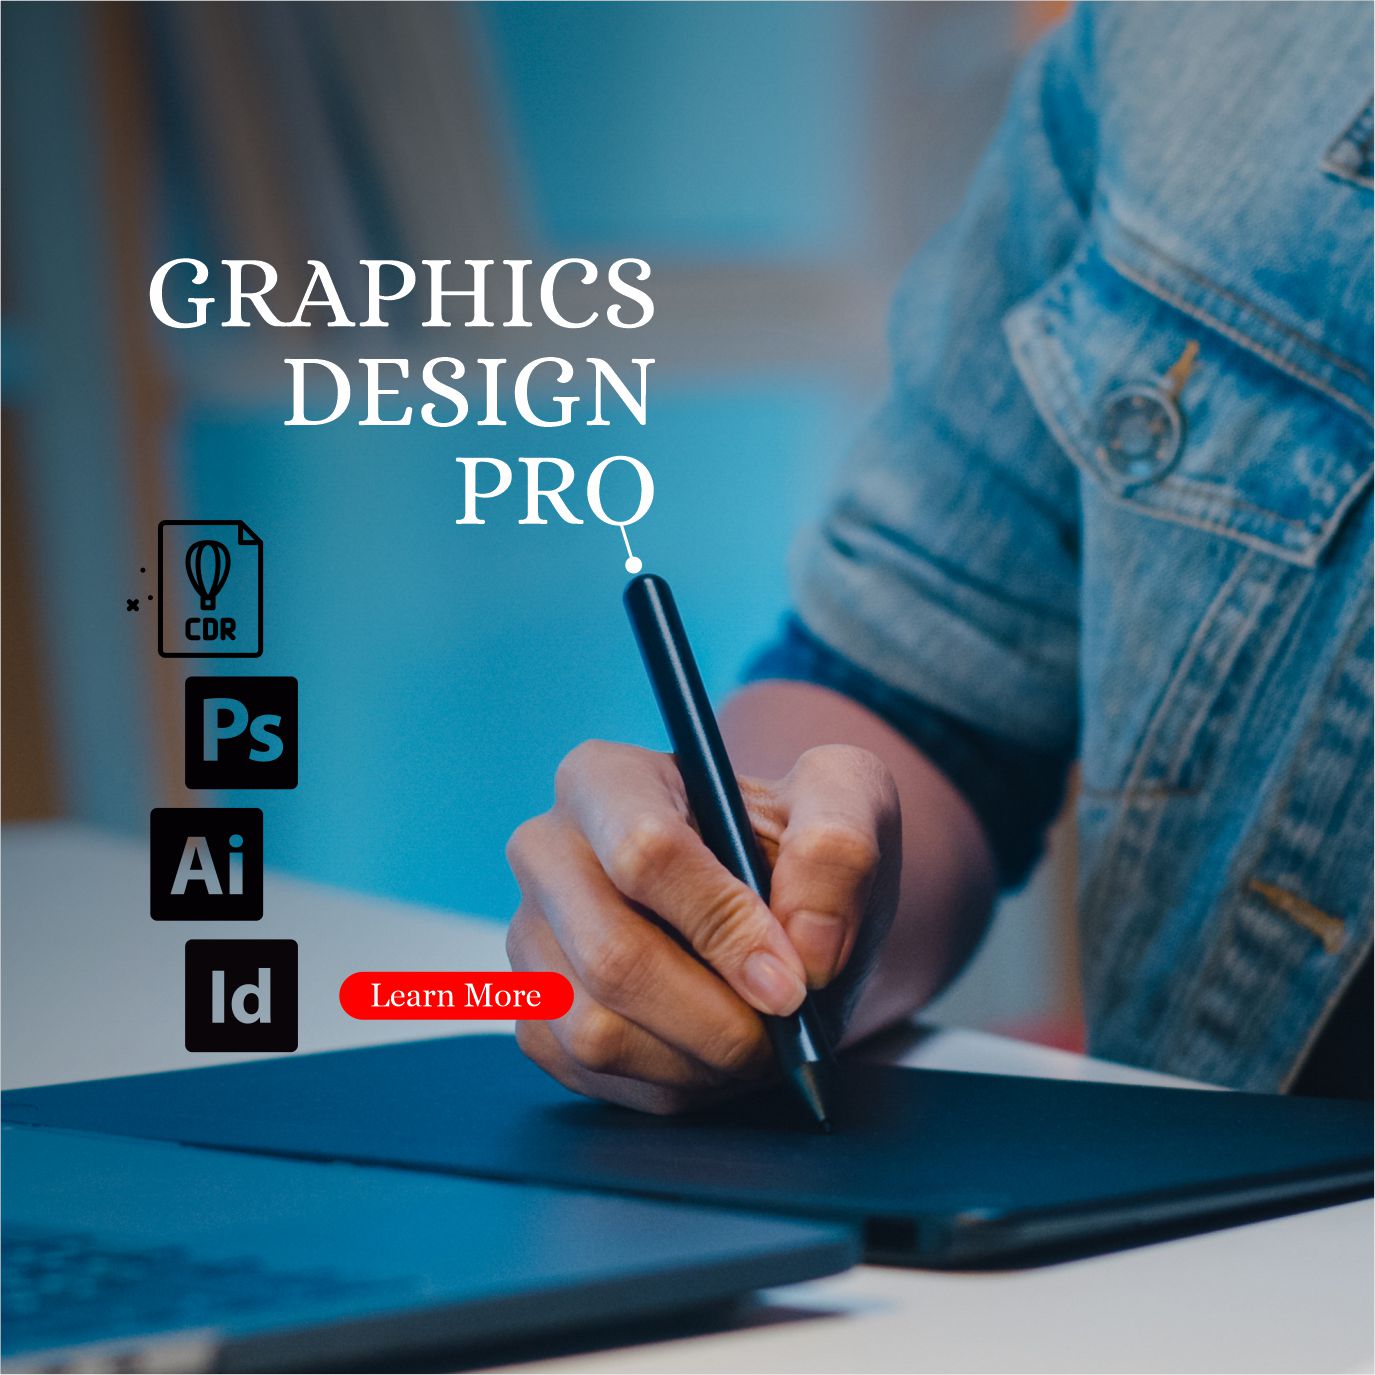 Adobe illustrator, photoshop, indesign Training Abuja stamsgroup